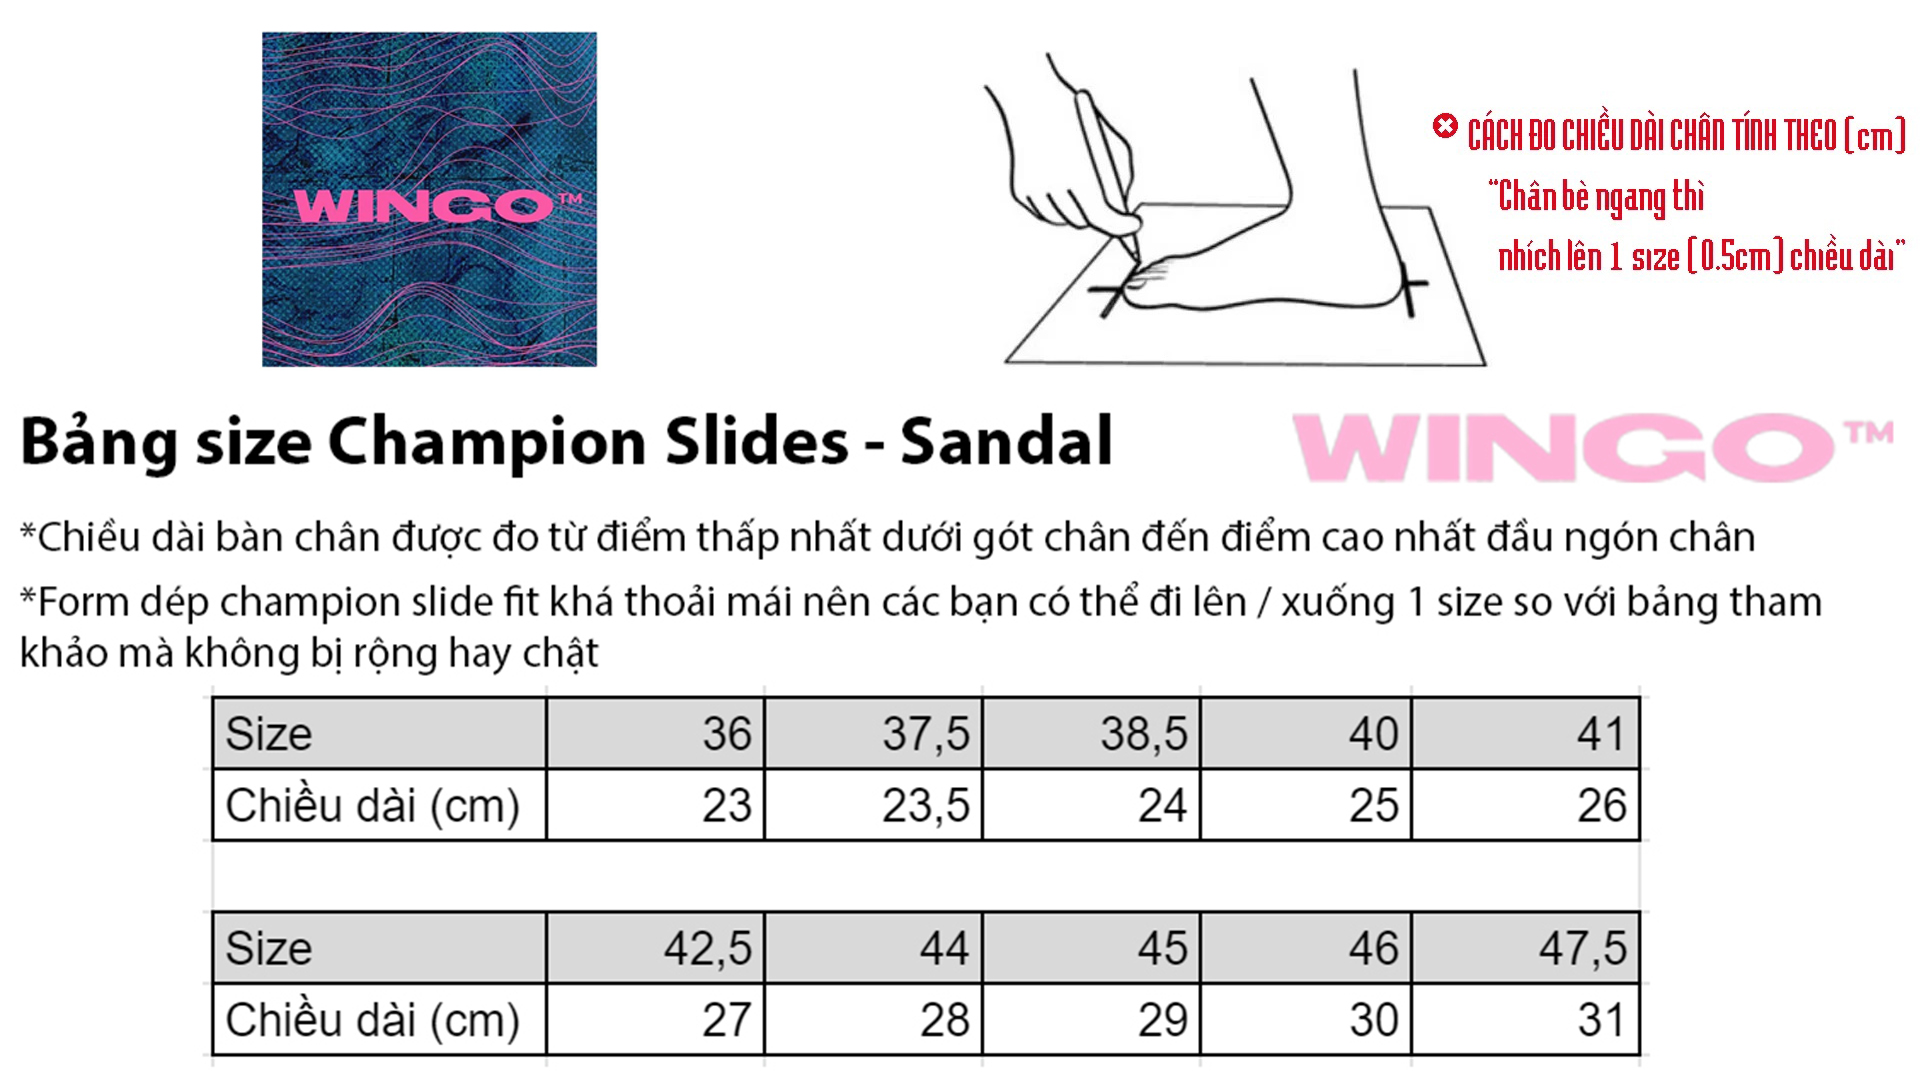 Bang size champion slides